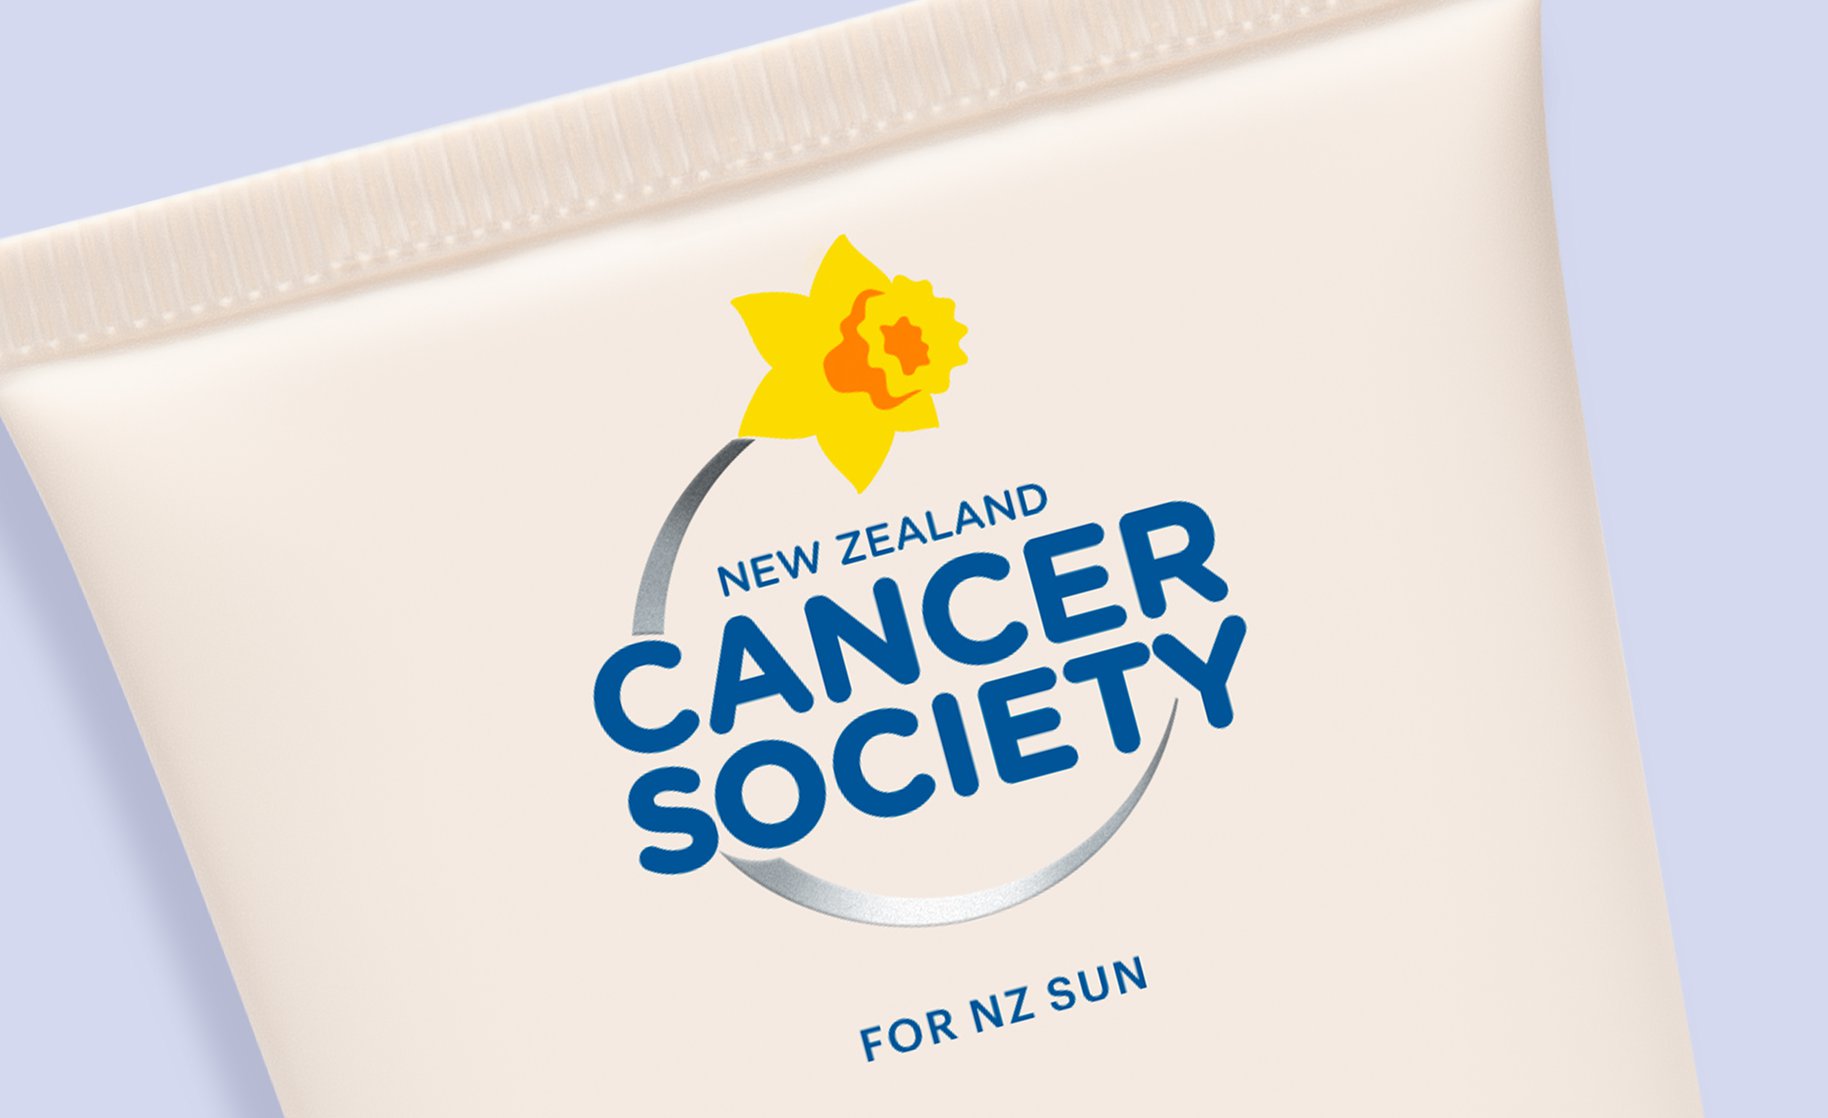 Cancer Society image